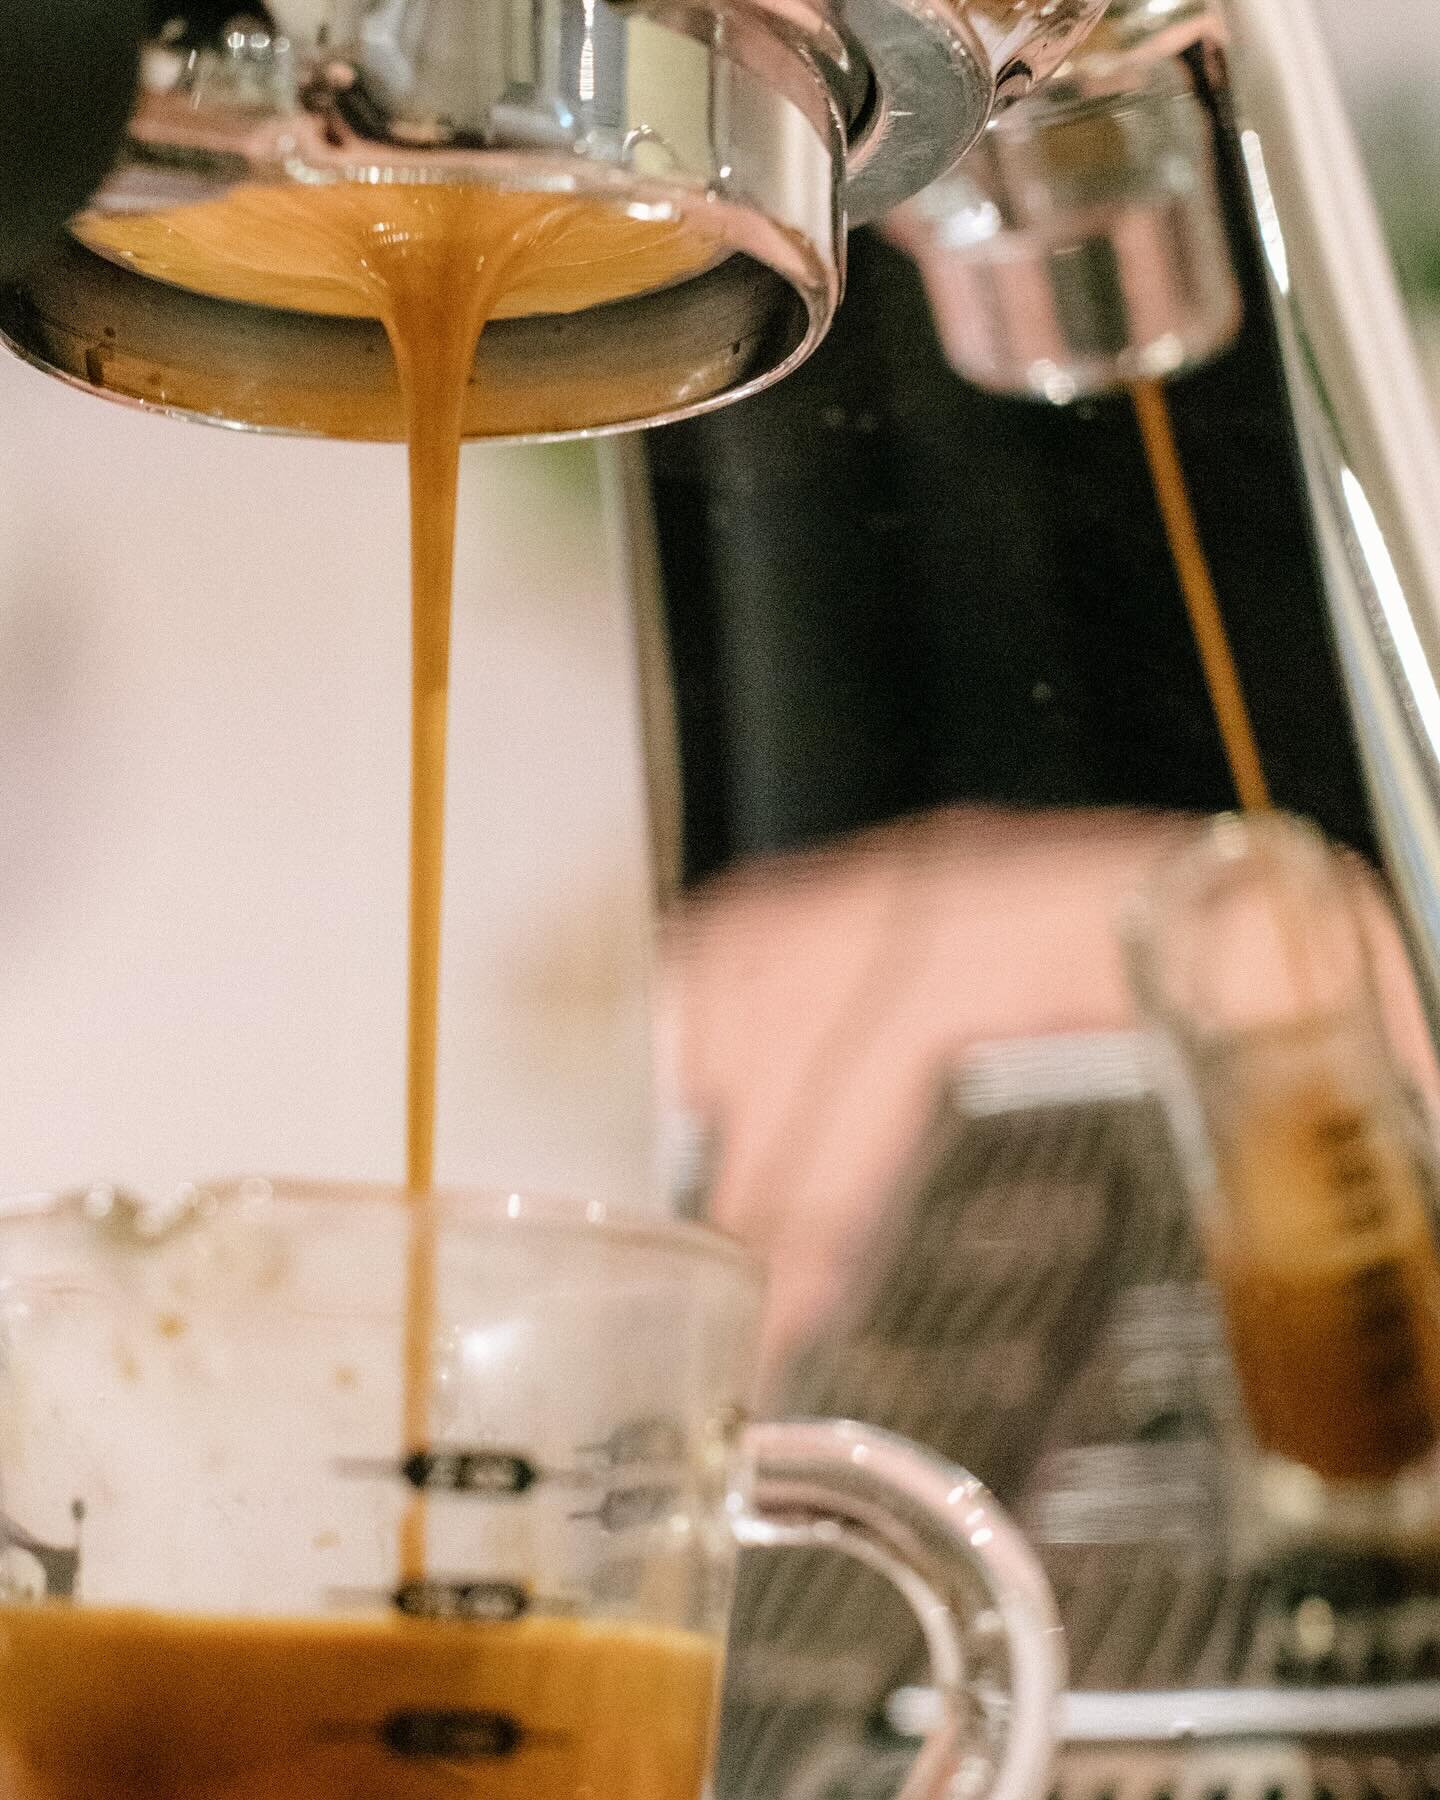 The money shot 😉☕️

#goodgriefcoffee #cafe #coffeeshop #themoneyshot #espressoshot #francesbeattyphotography #thornbury #coffeetime #latte #coffeehouse